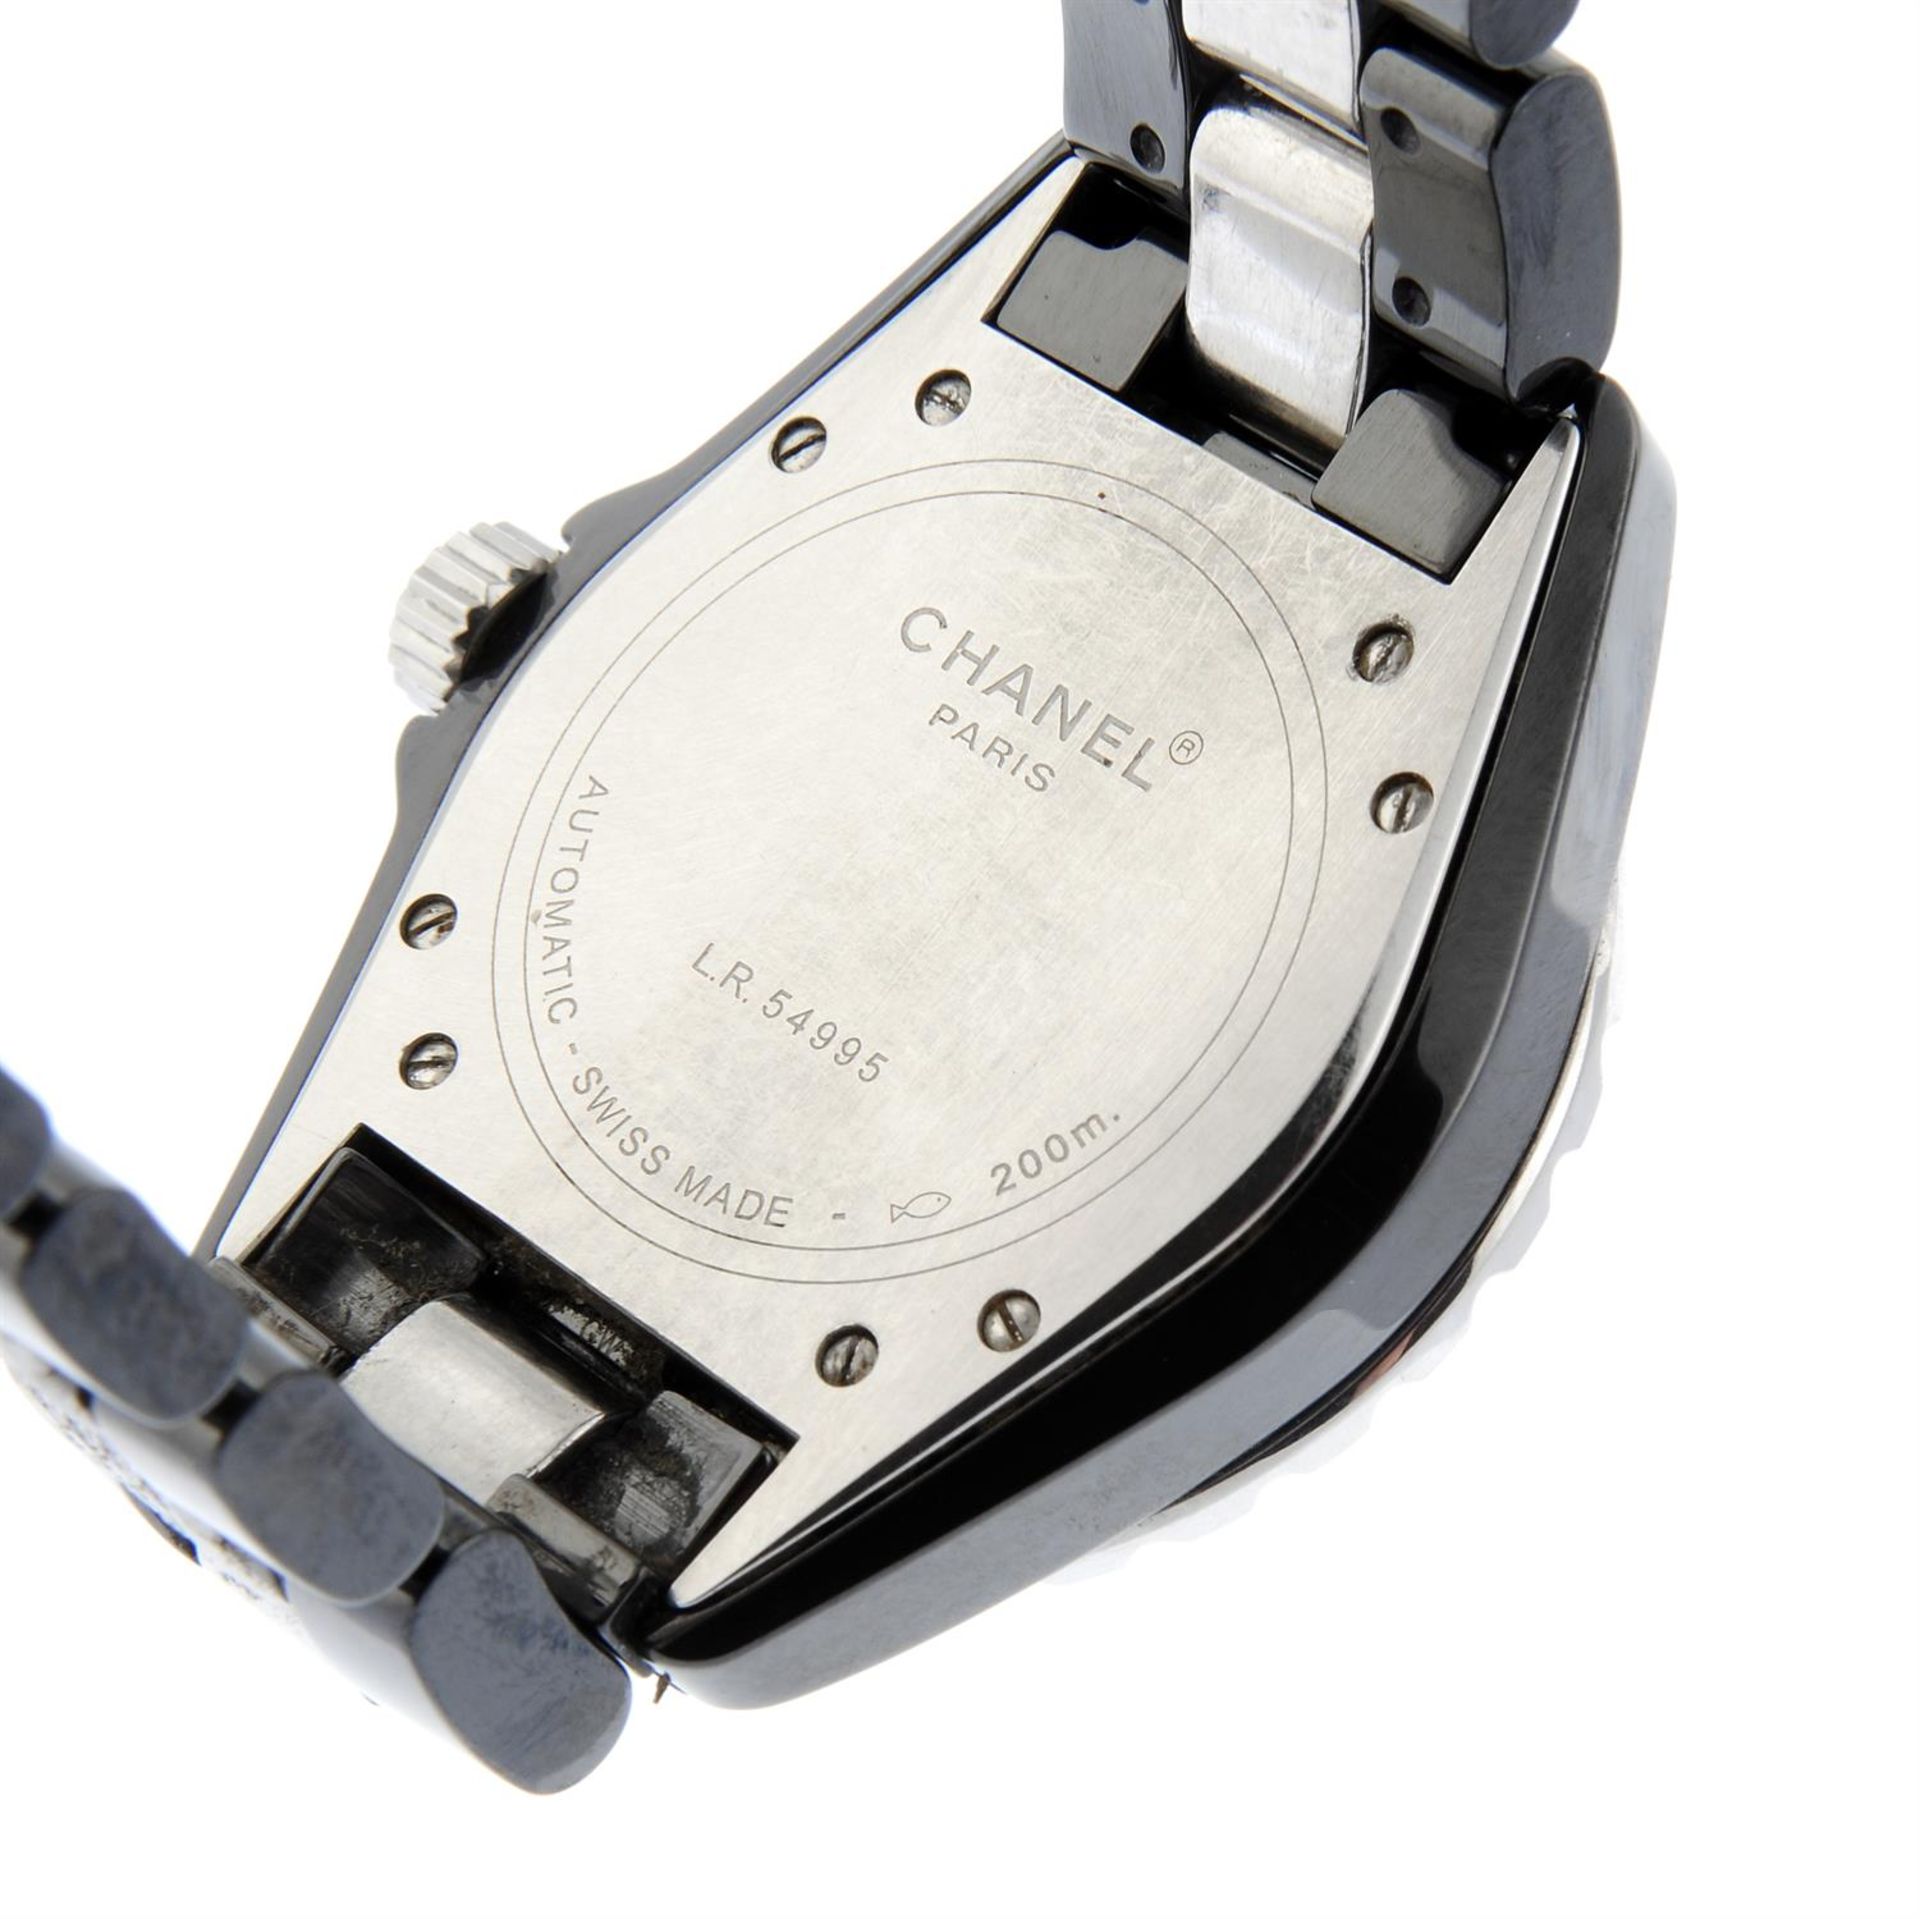 CHANEL - a bi-material J12 bracelet watch, 39mm. - Image 4 of 5